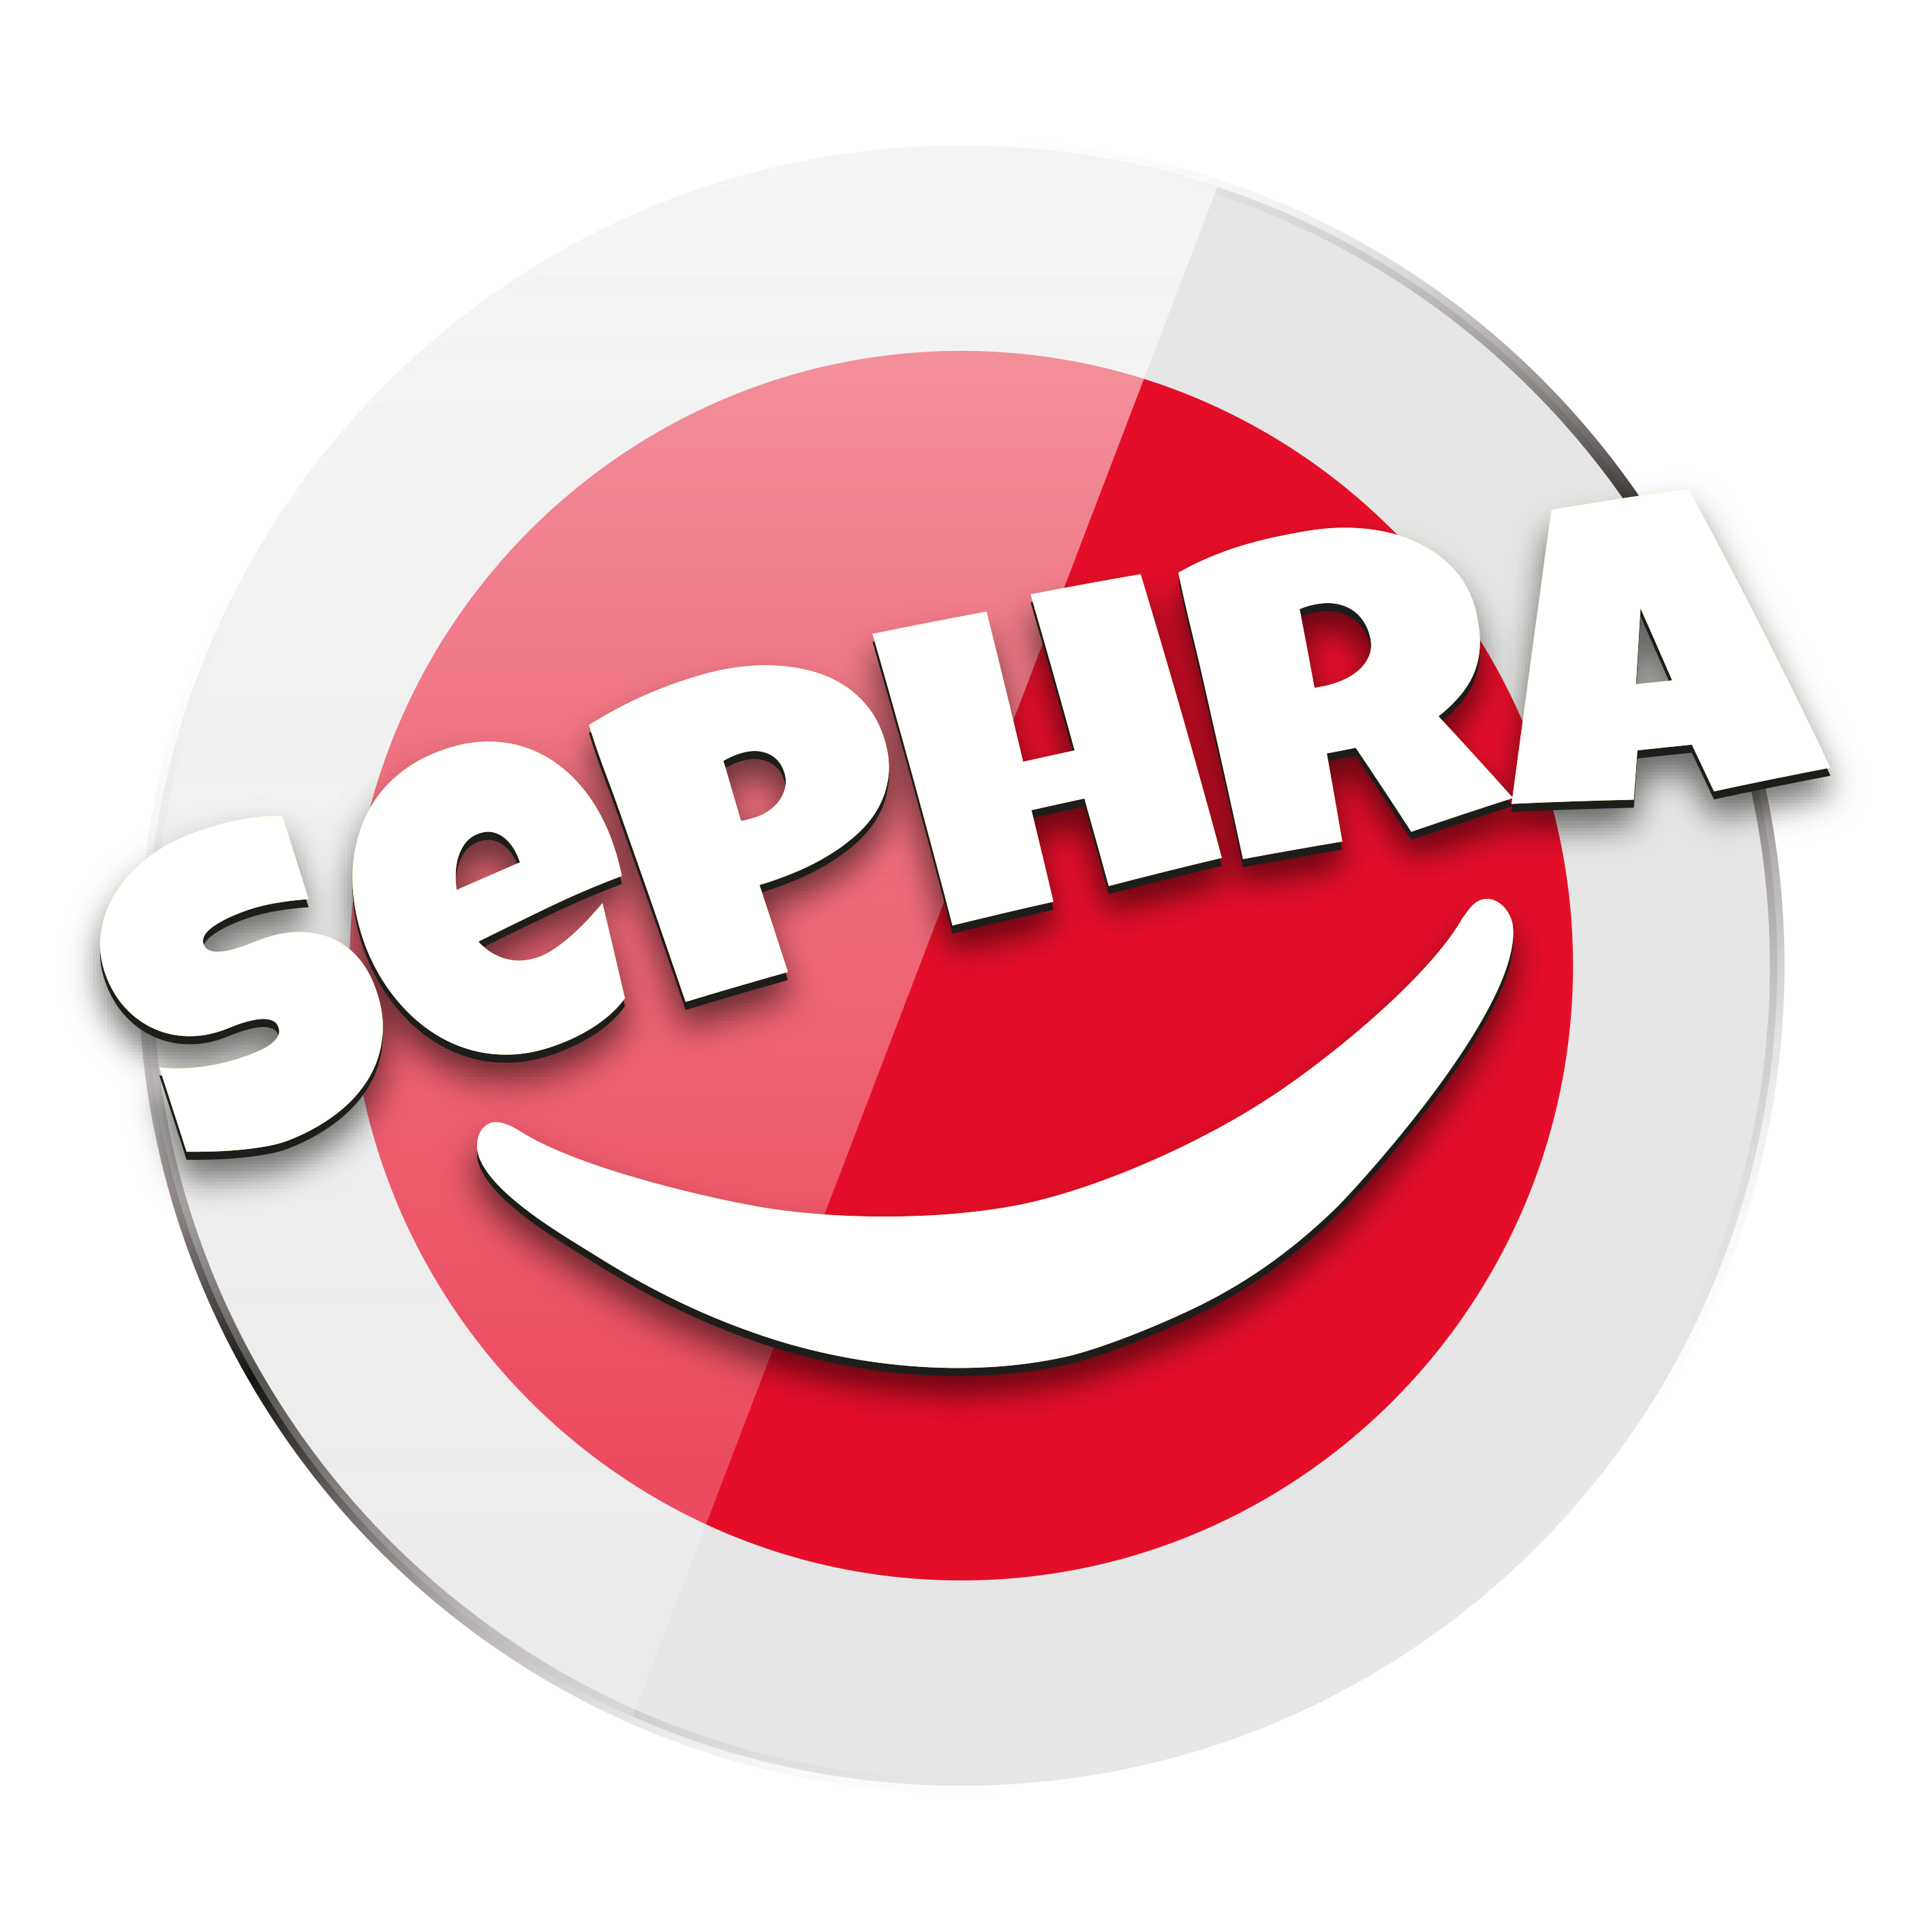 Sephra